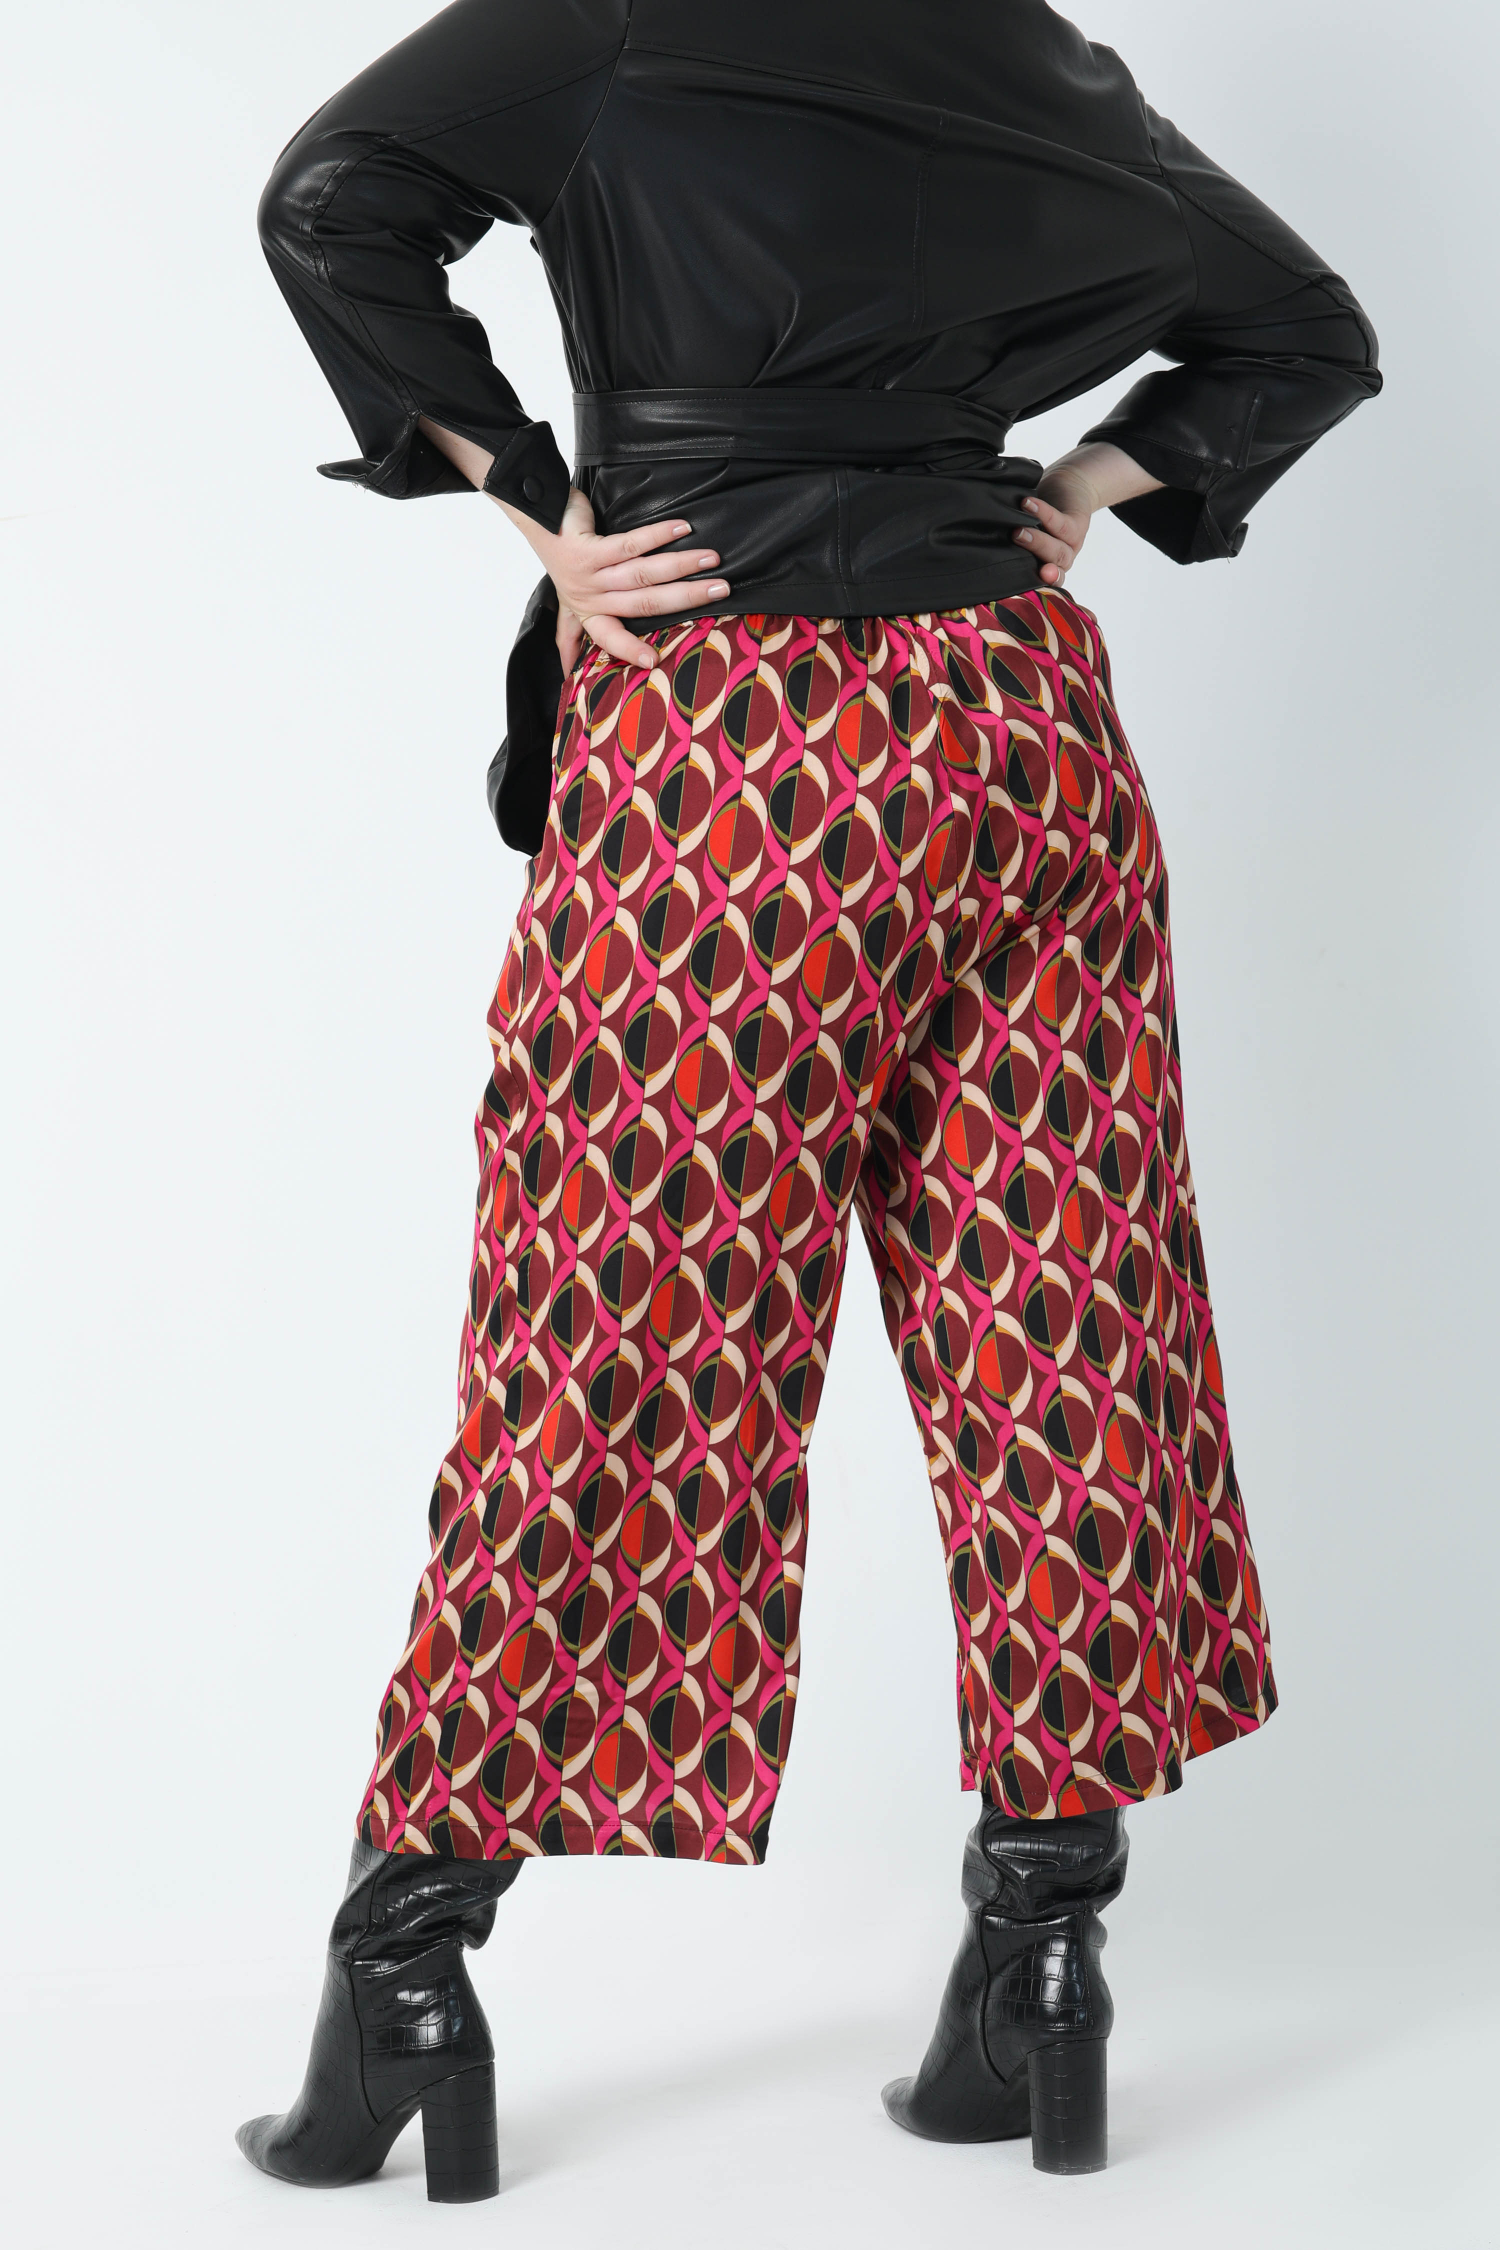 Printed culotte skirt oeko-tex fabric (Shipping 25/30 September)